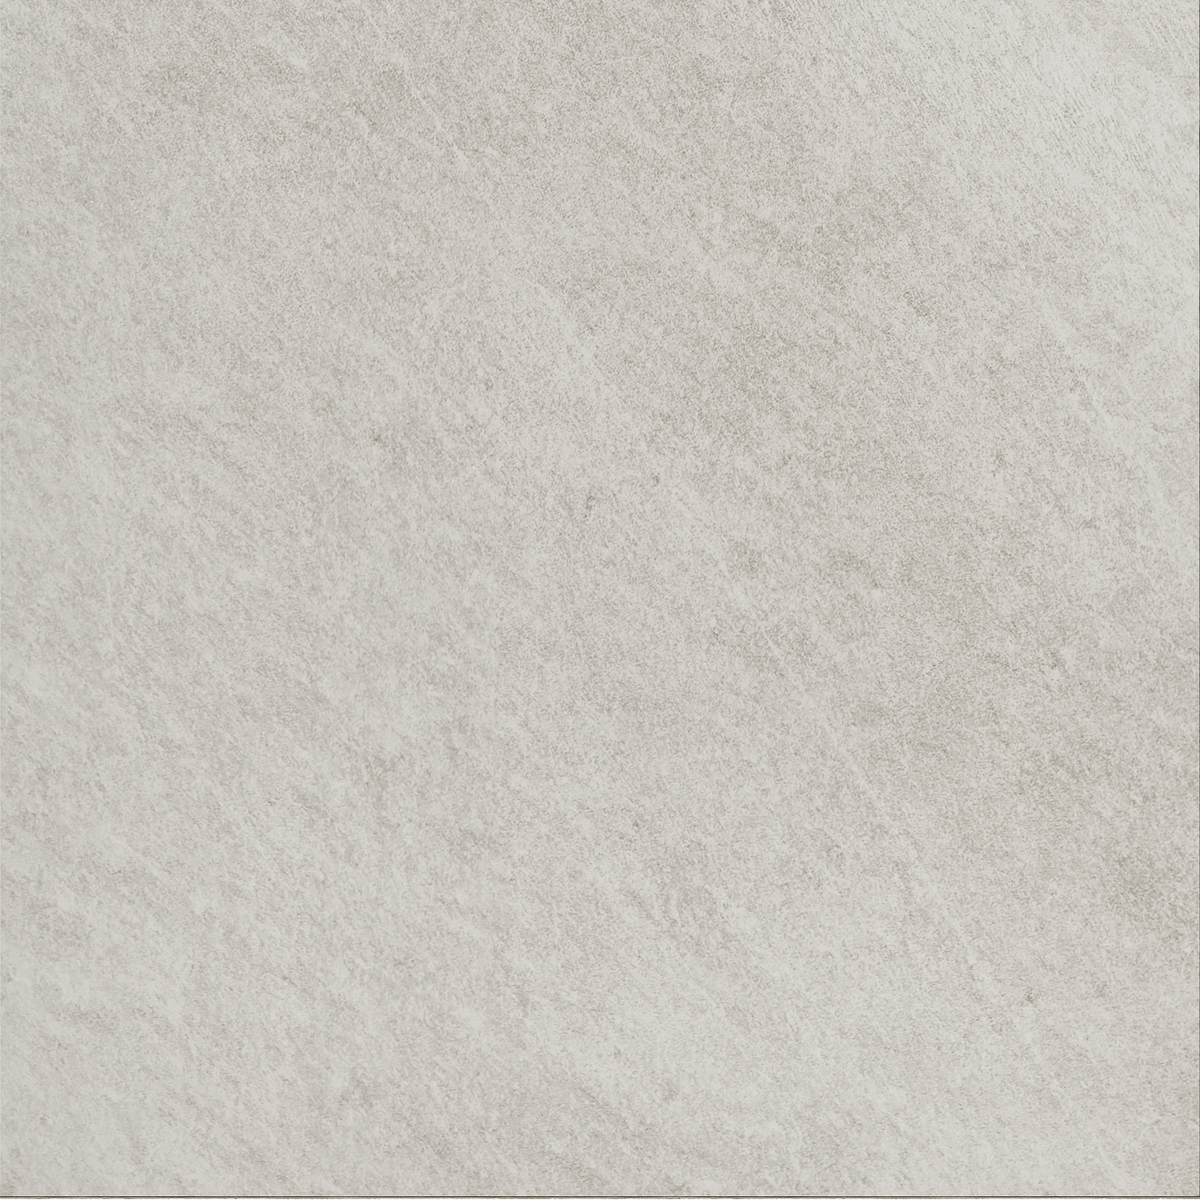 Imola X-Rock Bianco Natural Bocciardato Matt Outdoor 155755 60x60cm rectified 20mm - X-ROCK 60W AS